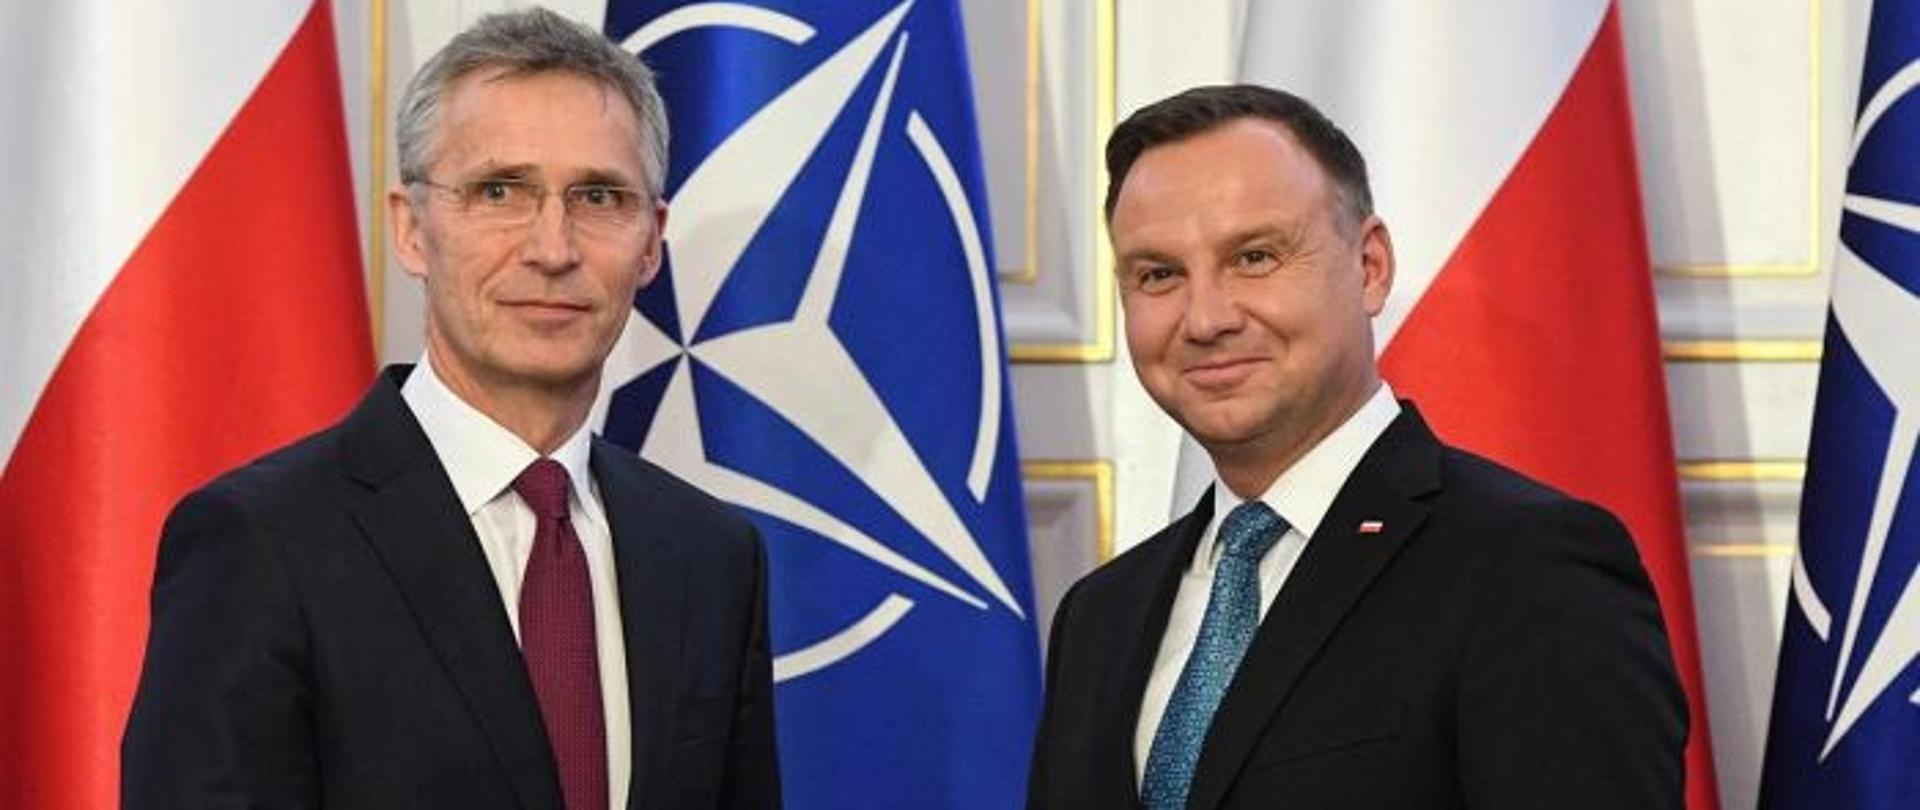 President Andrzej Duda & NATO SG Jens Stoltenberg